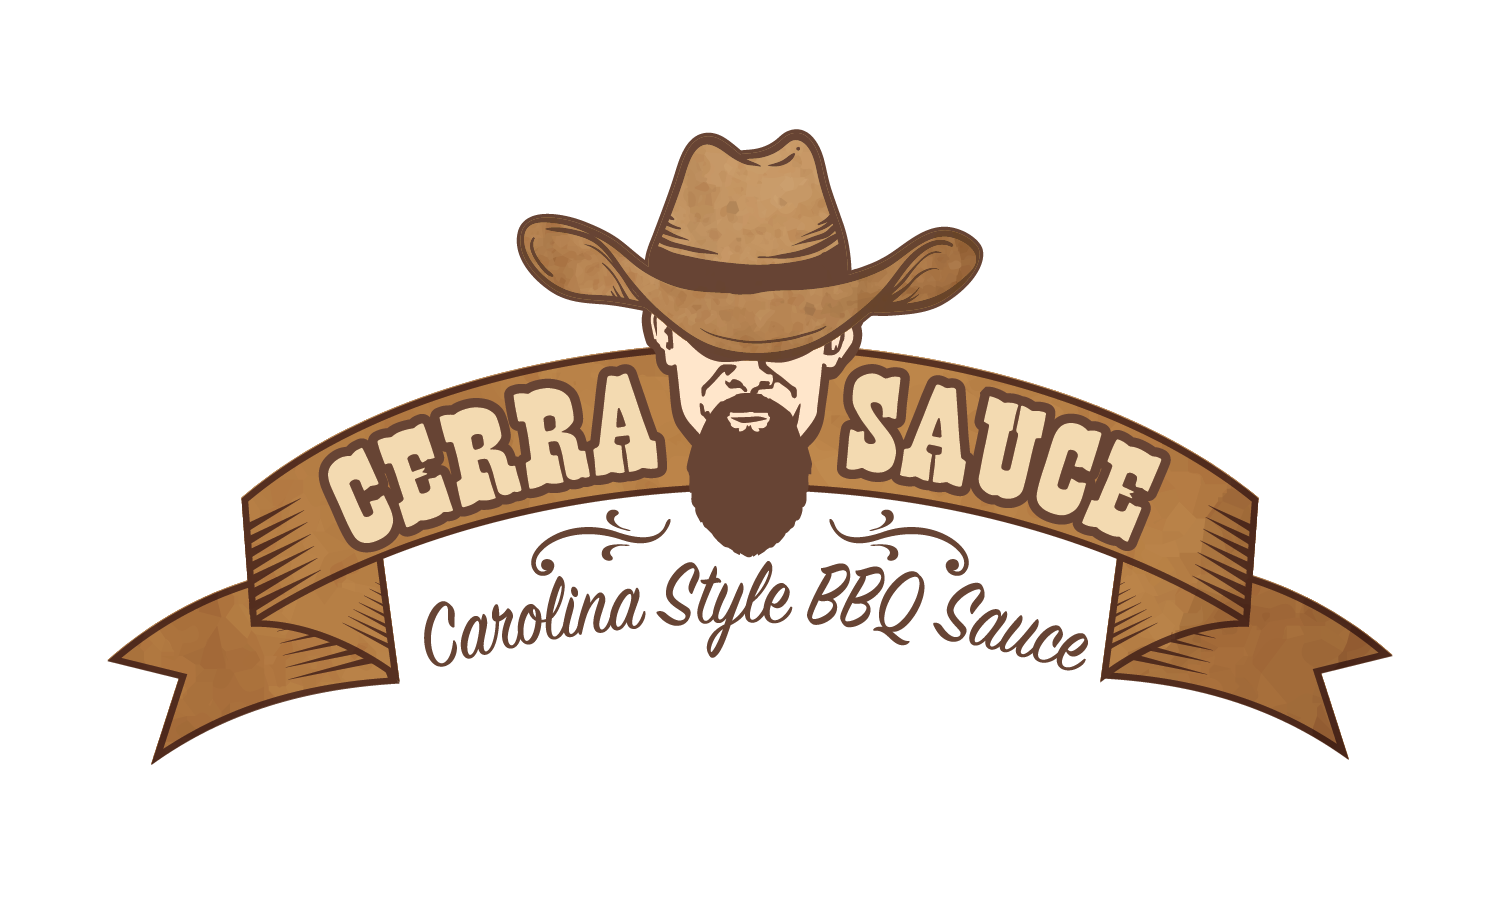 CerraSauce - Sauces and Seasonings